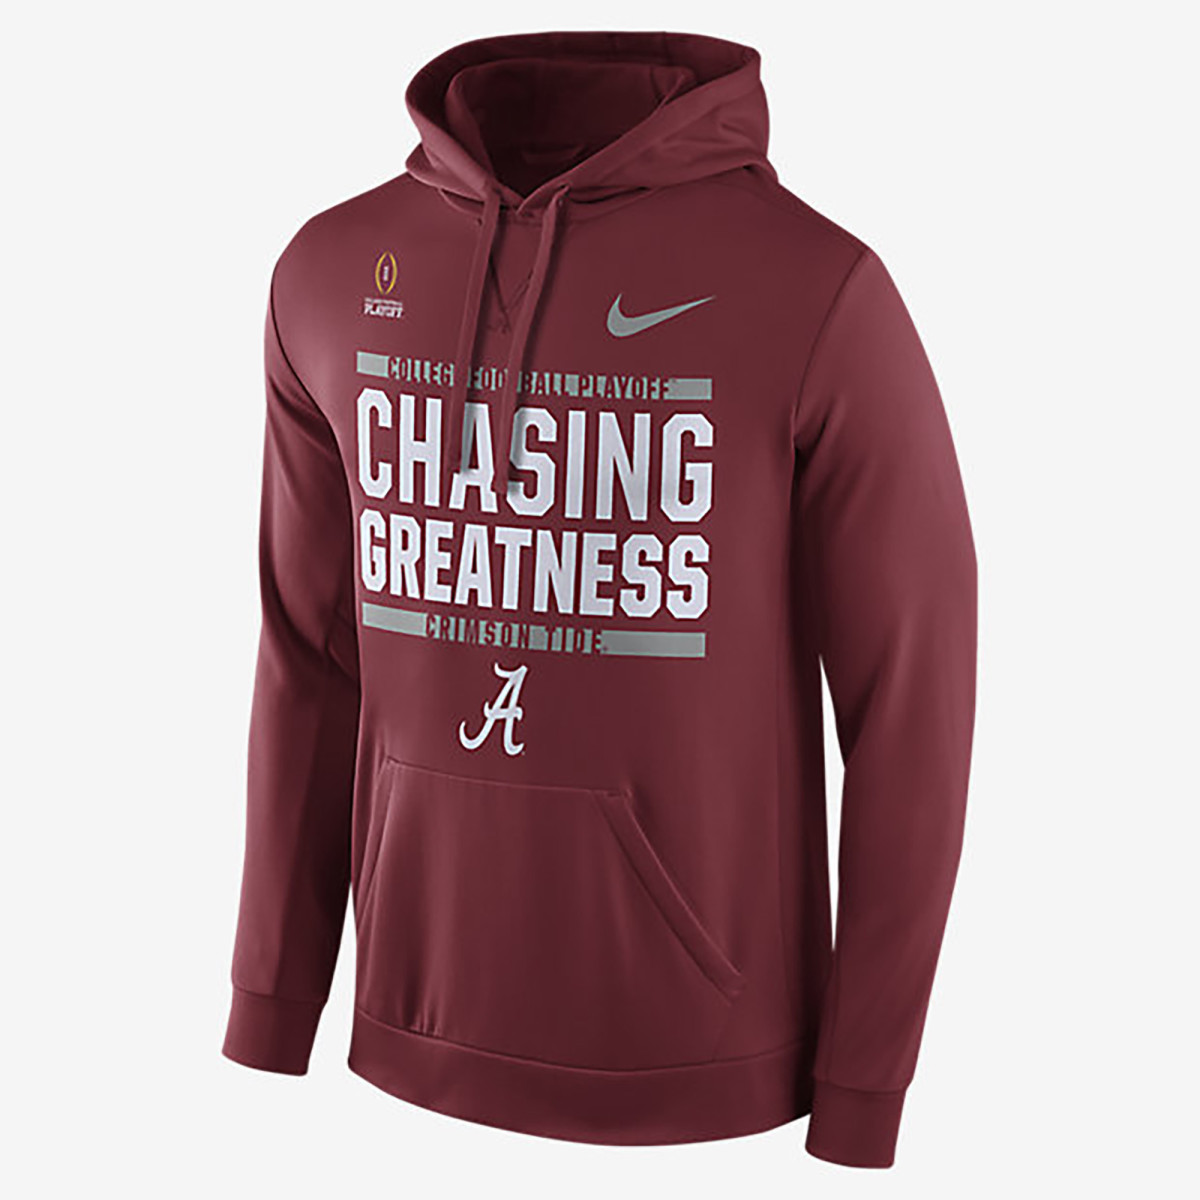 playoff-bound-chasing-greatness-alabama-mens-pullover-hoodie.jpg